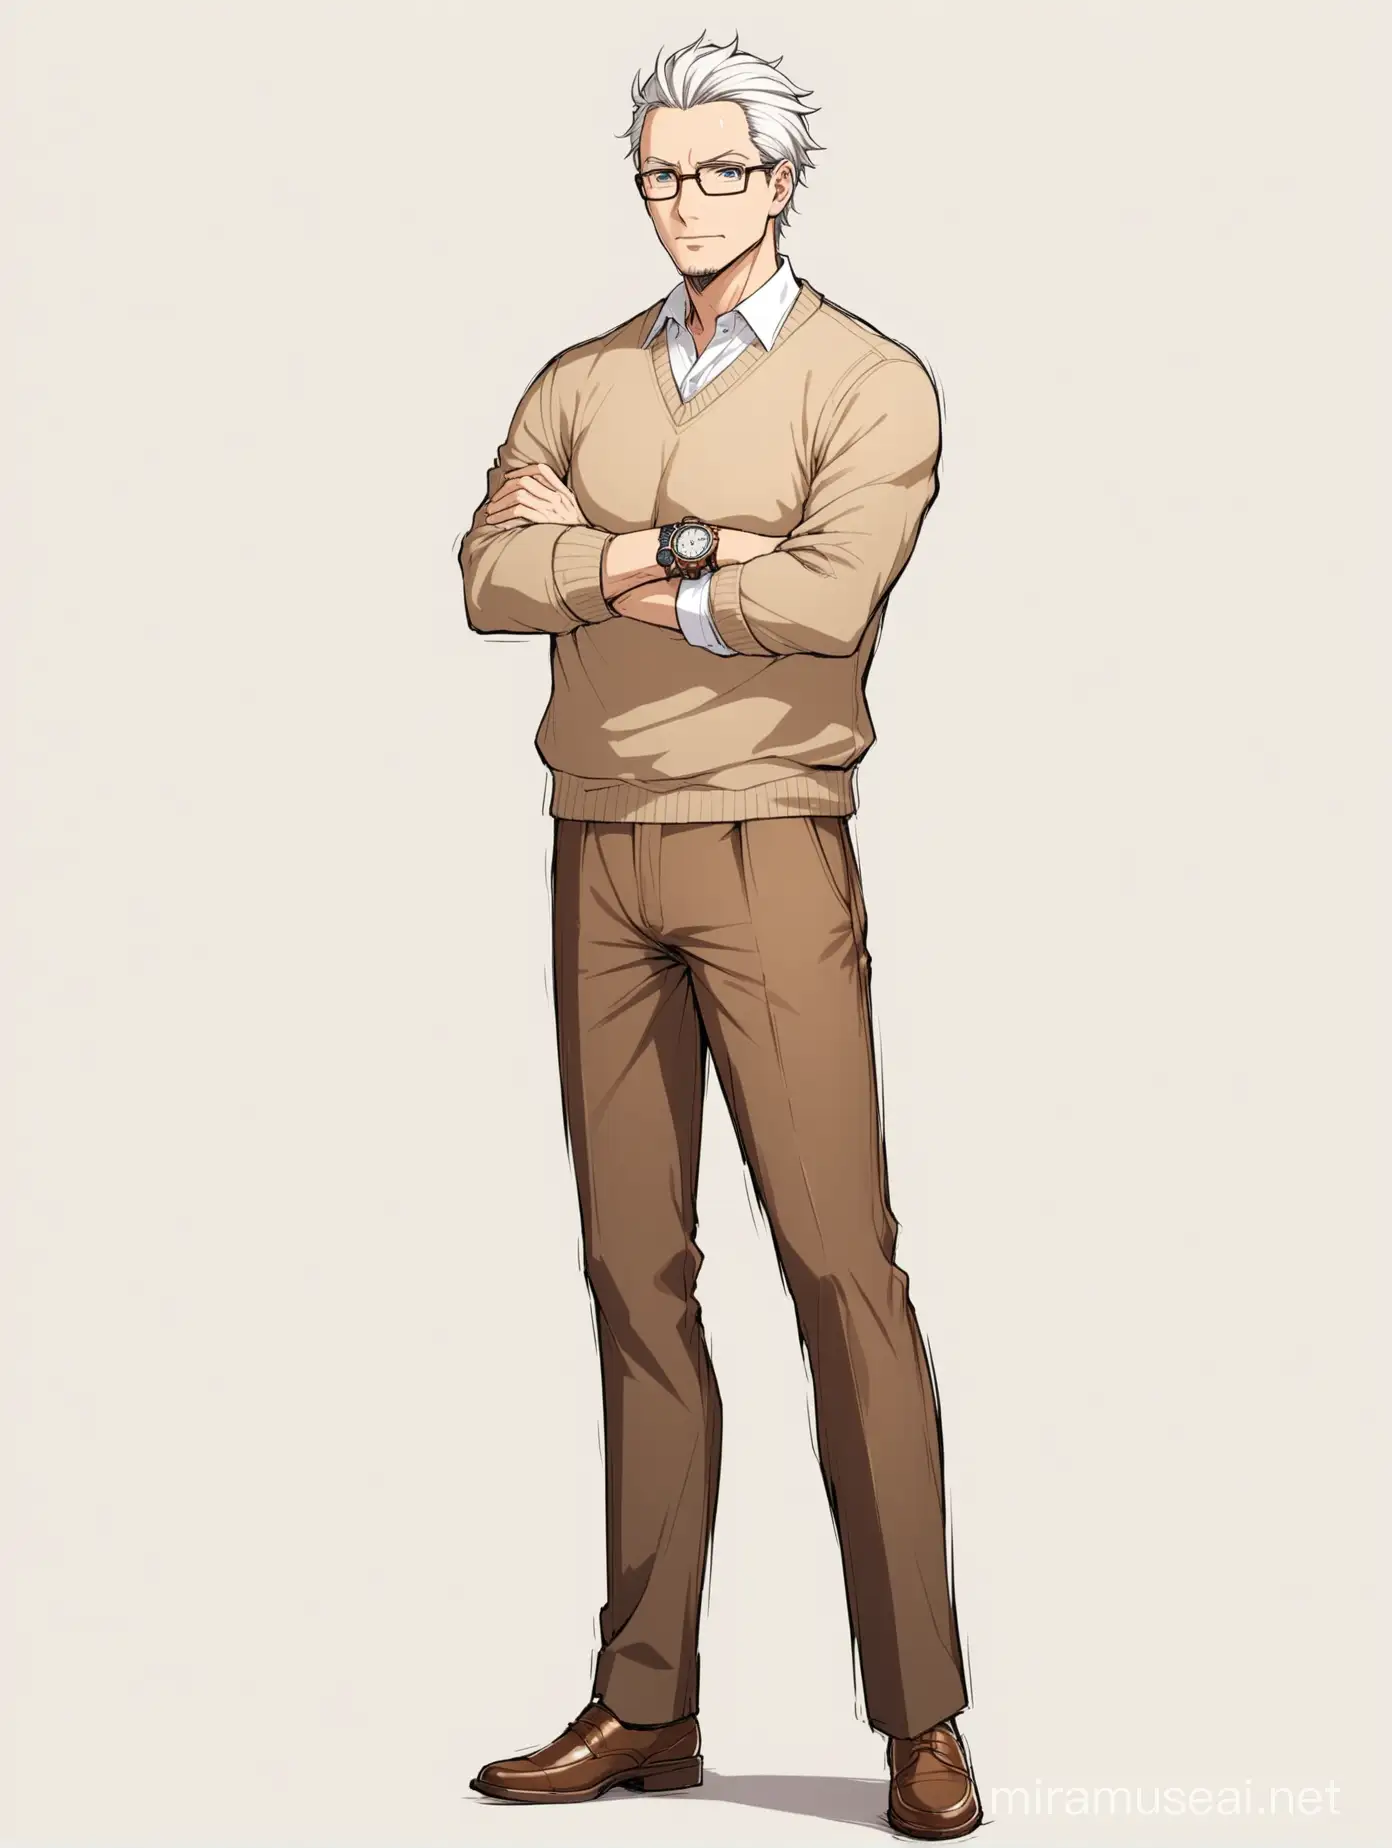 Confident Mature Anime Man in Stylish Attire and Glasses